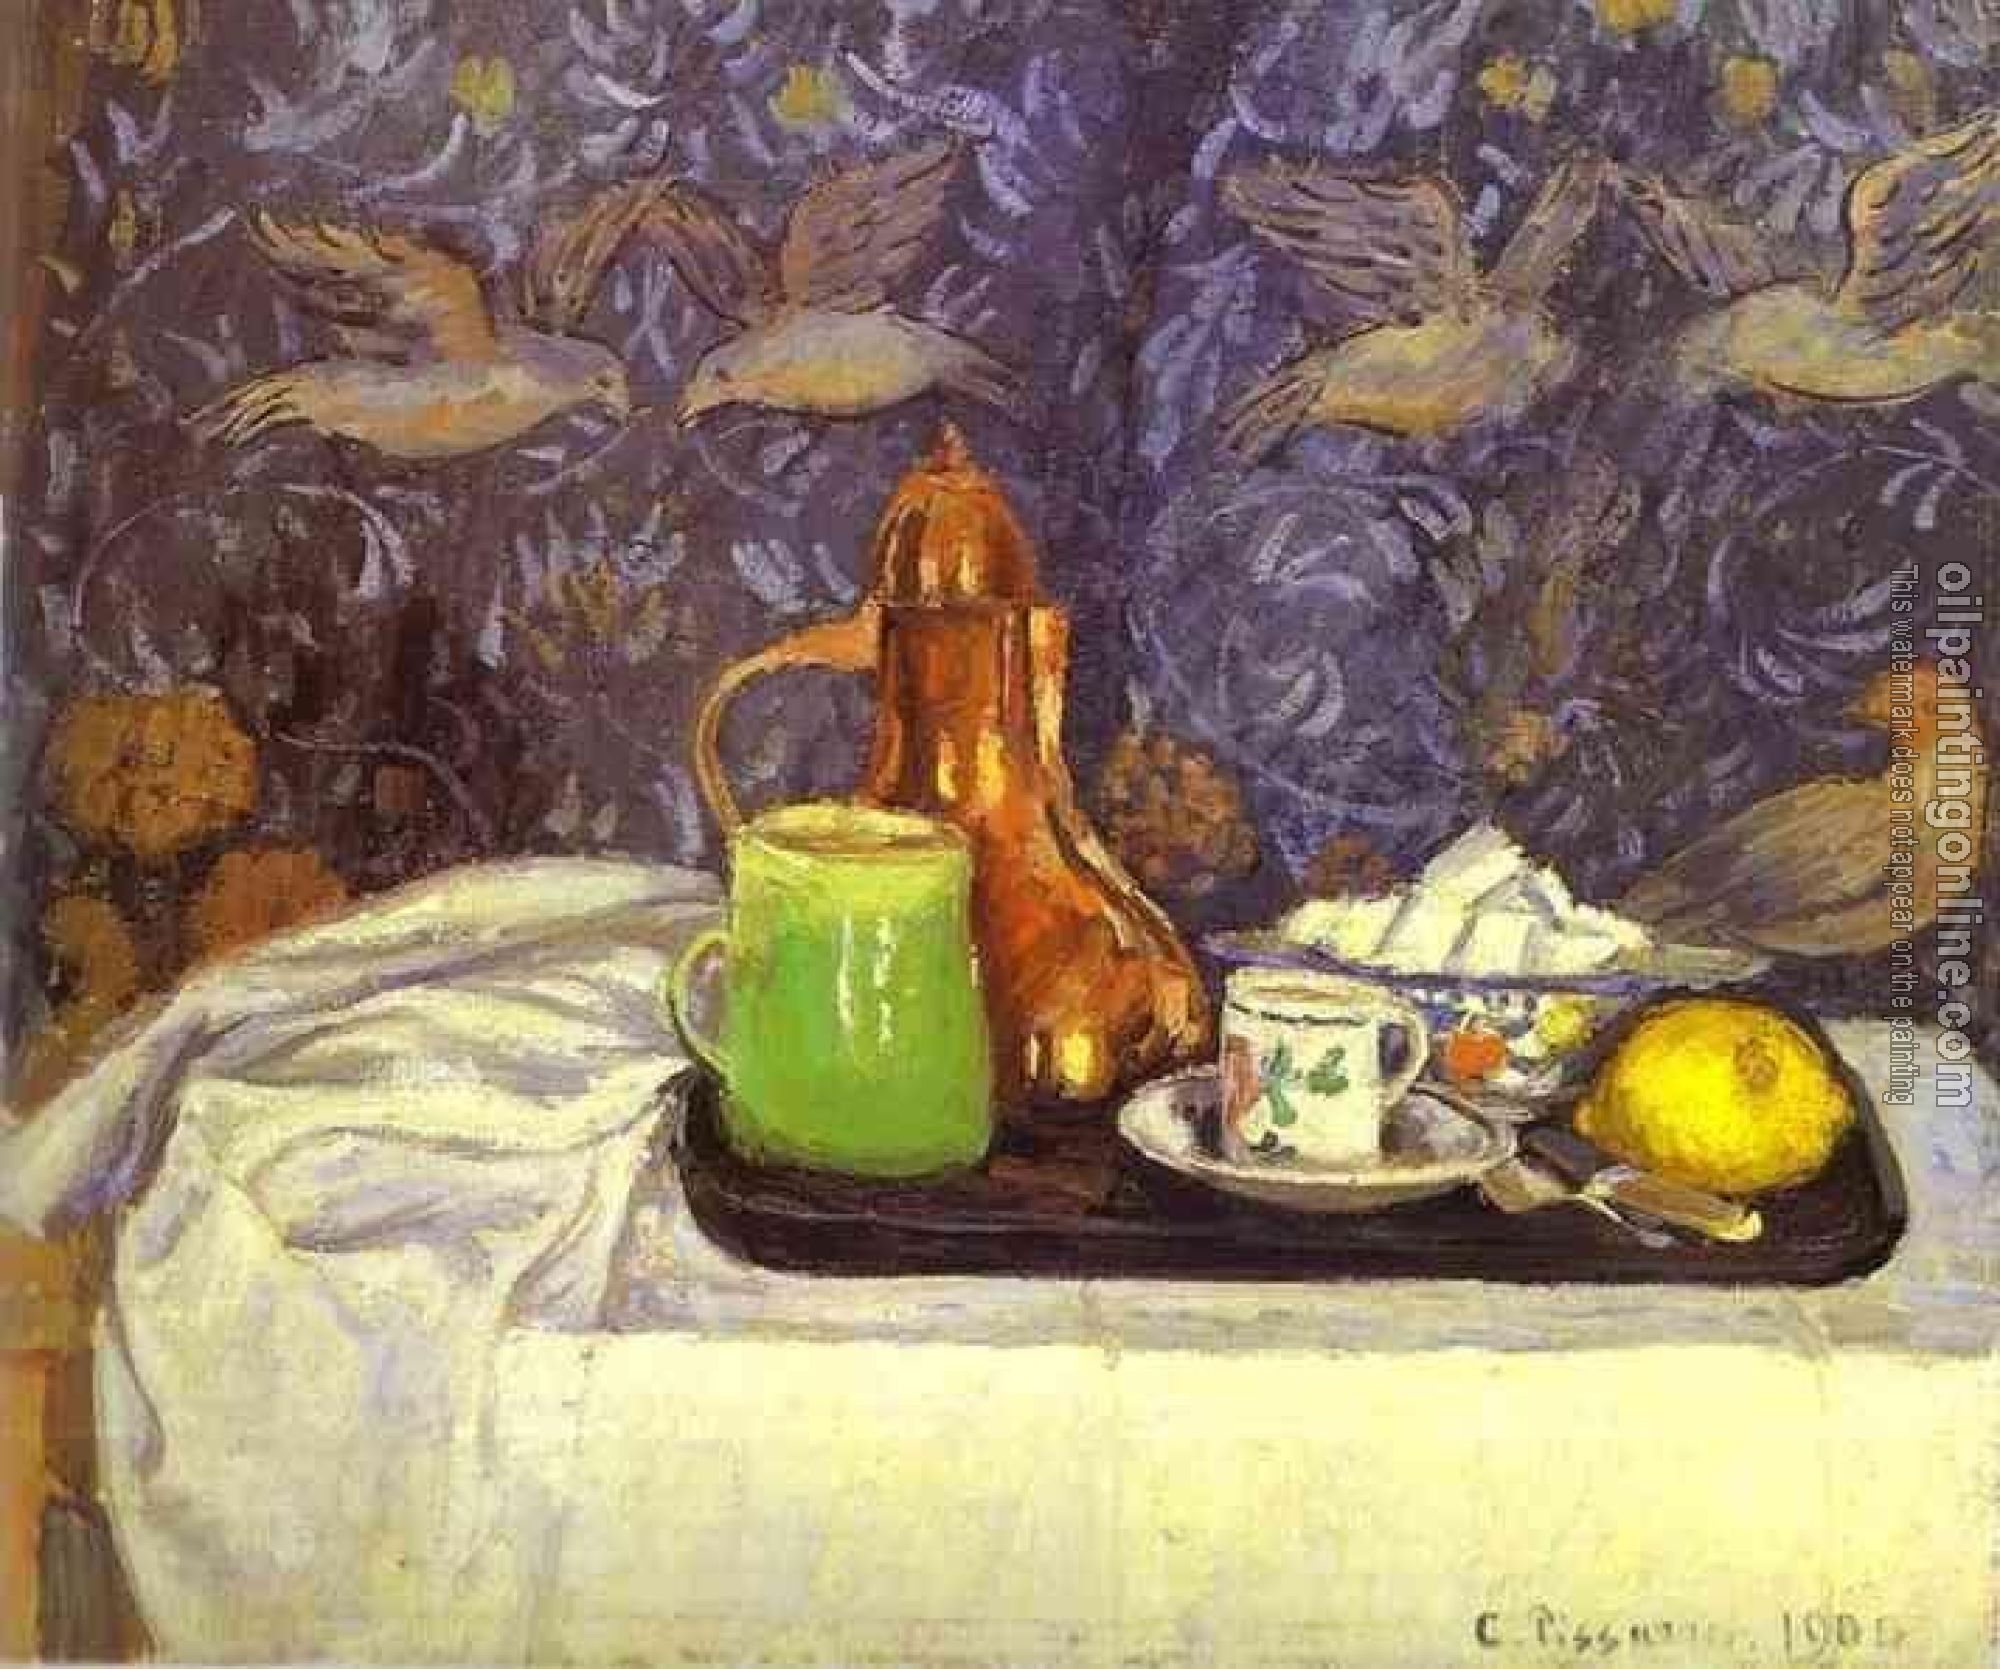 Pissarro, Camille - Still Life with a Coffee Pot